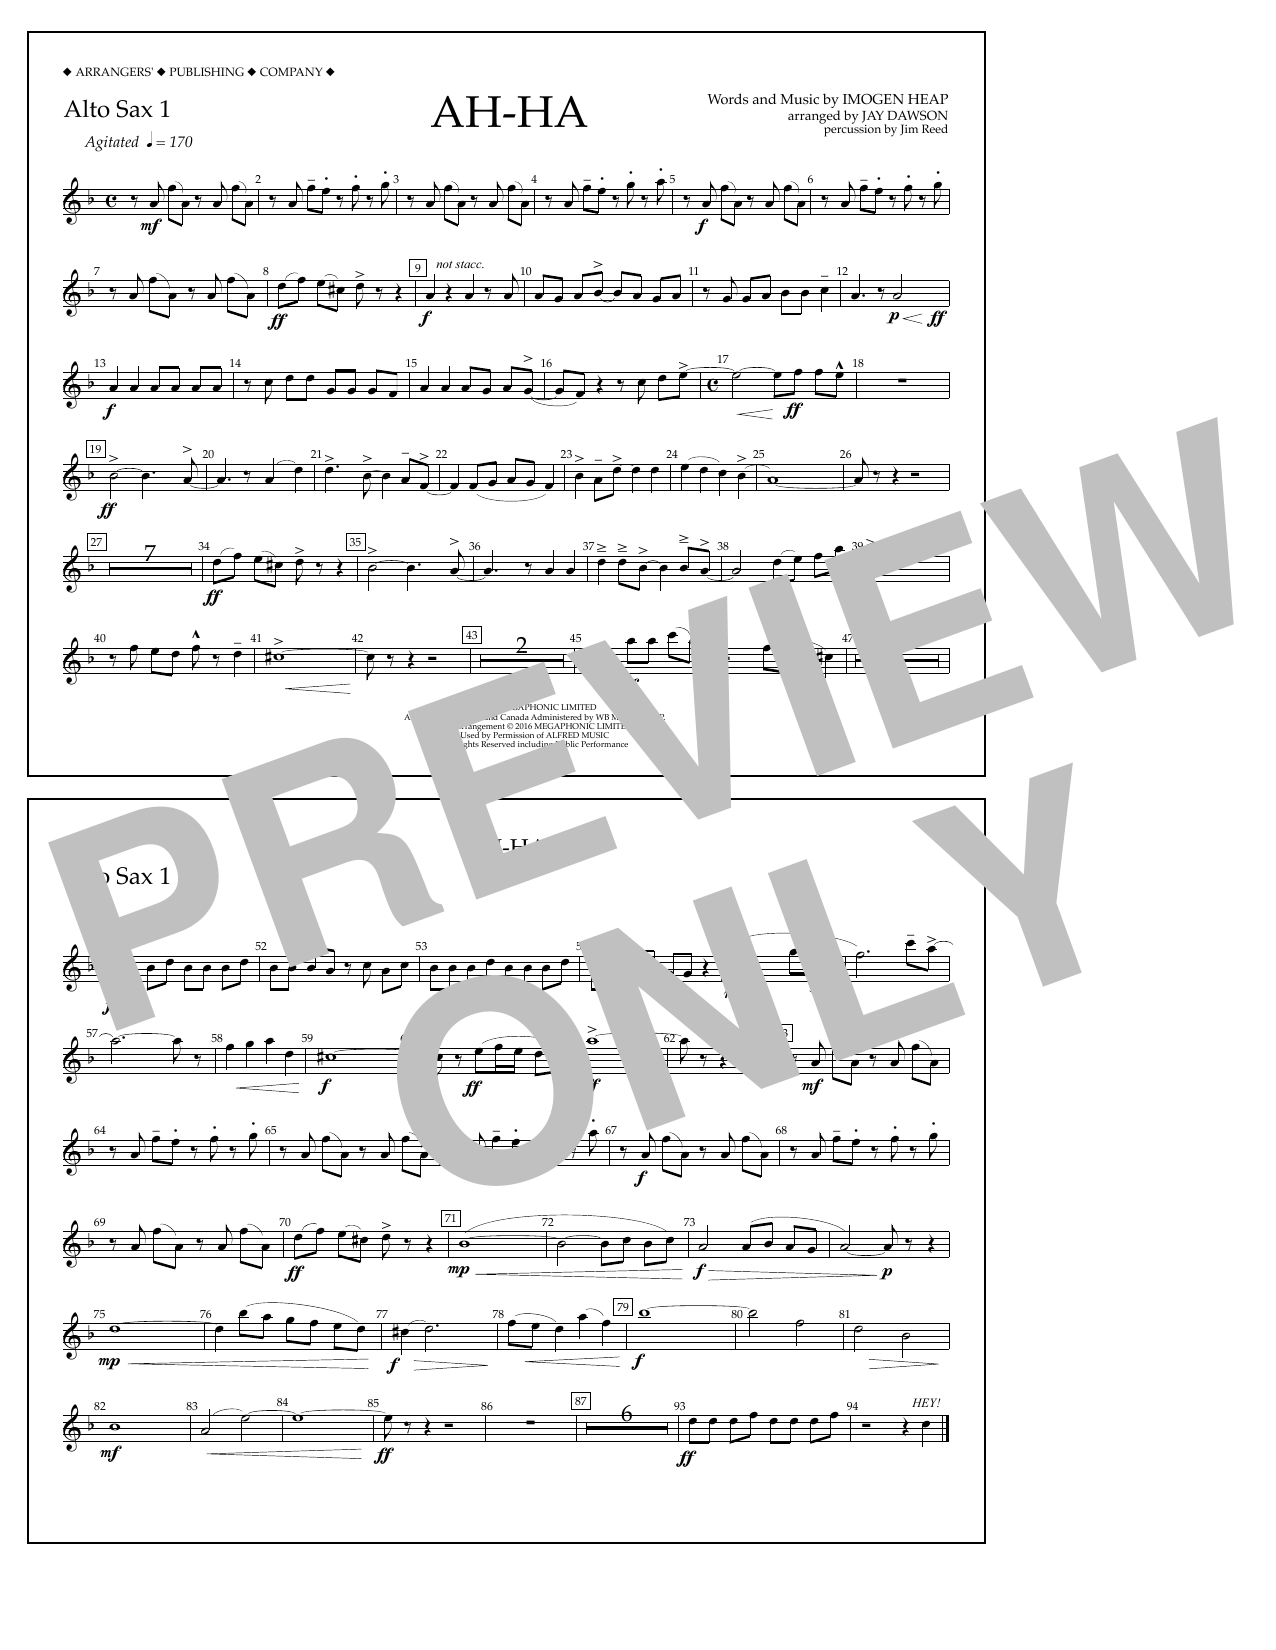 Jay Dawson Ah-ha - Alto Sax 1 Sheet Music Notes & Chords for Marching Band - Download or Print PDF